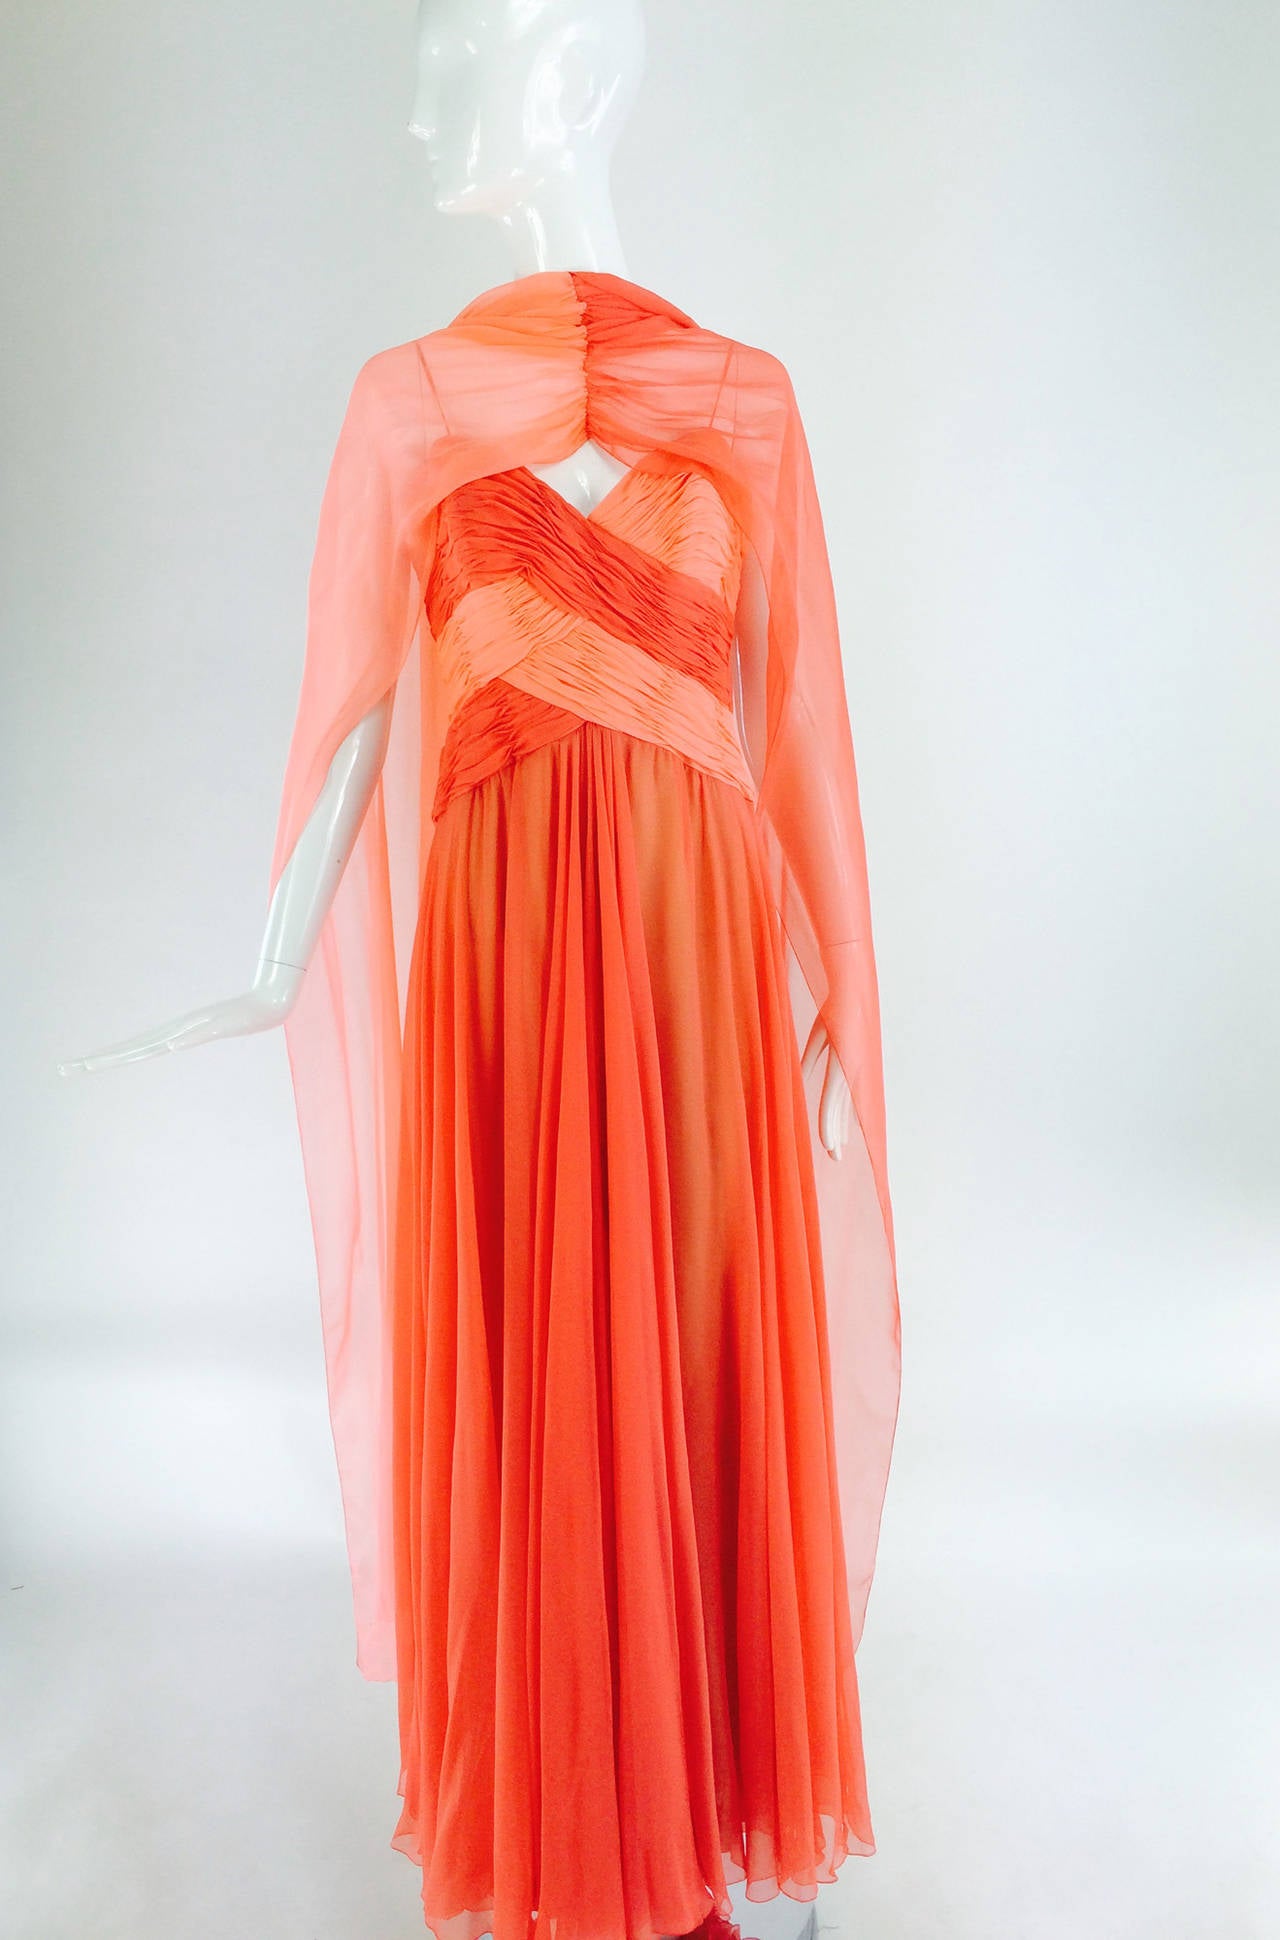 Loris Azzaro goddess gown in coral/peach silk chiffon 1970s 3